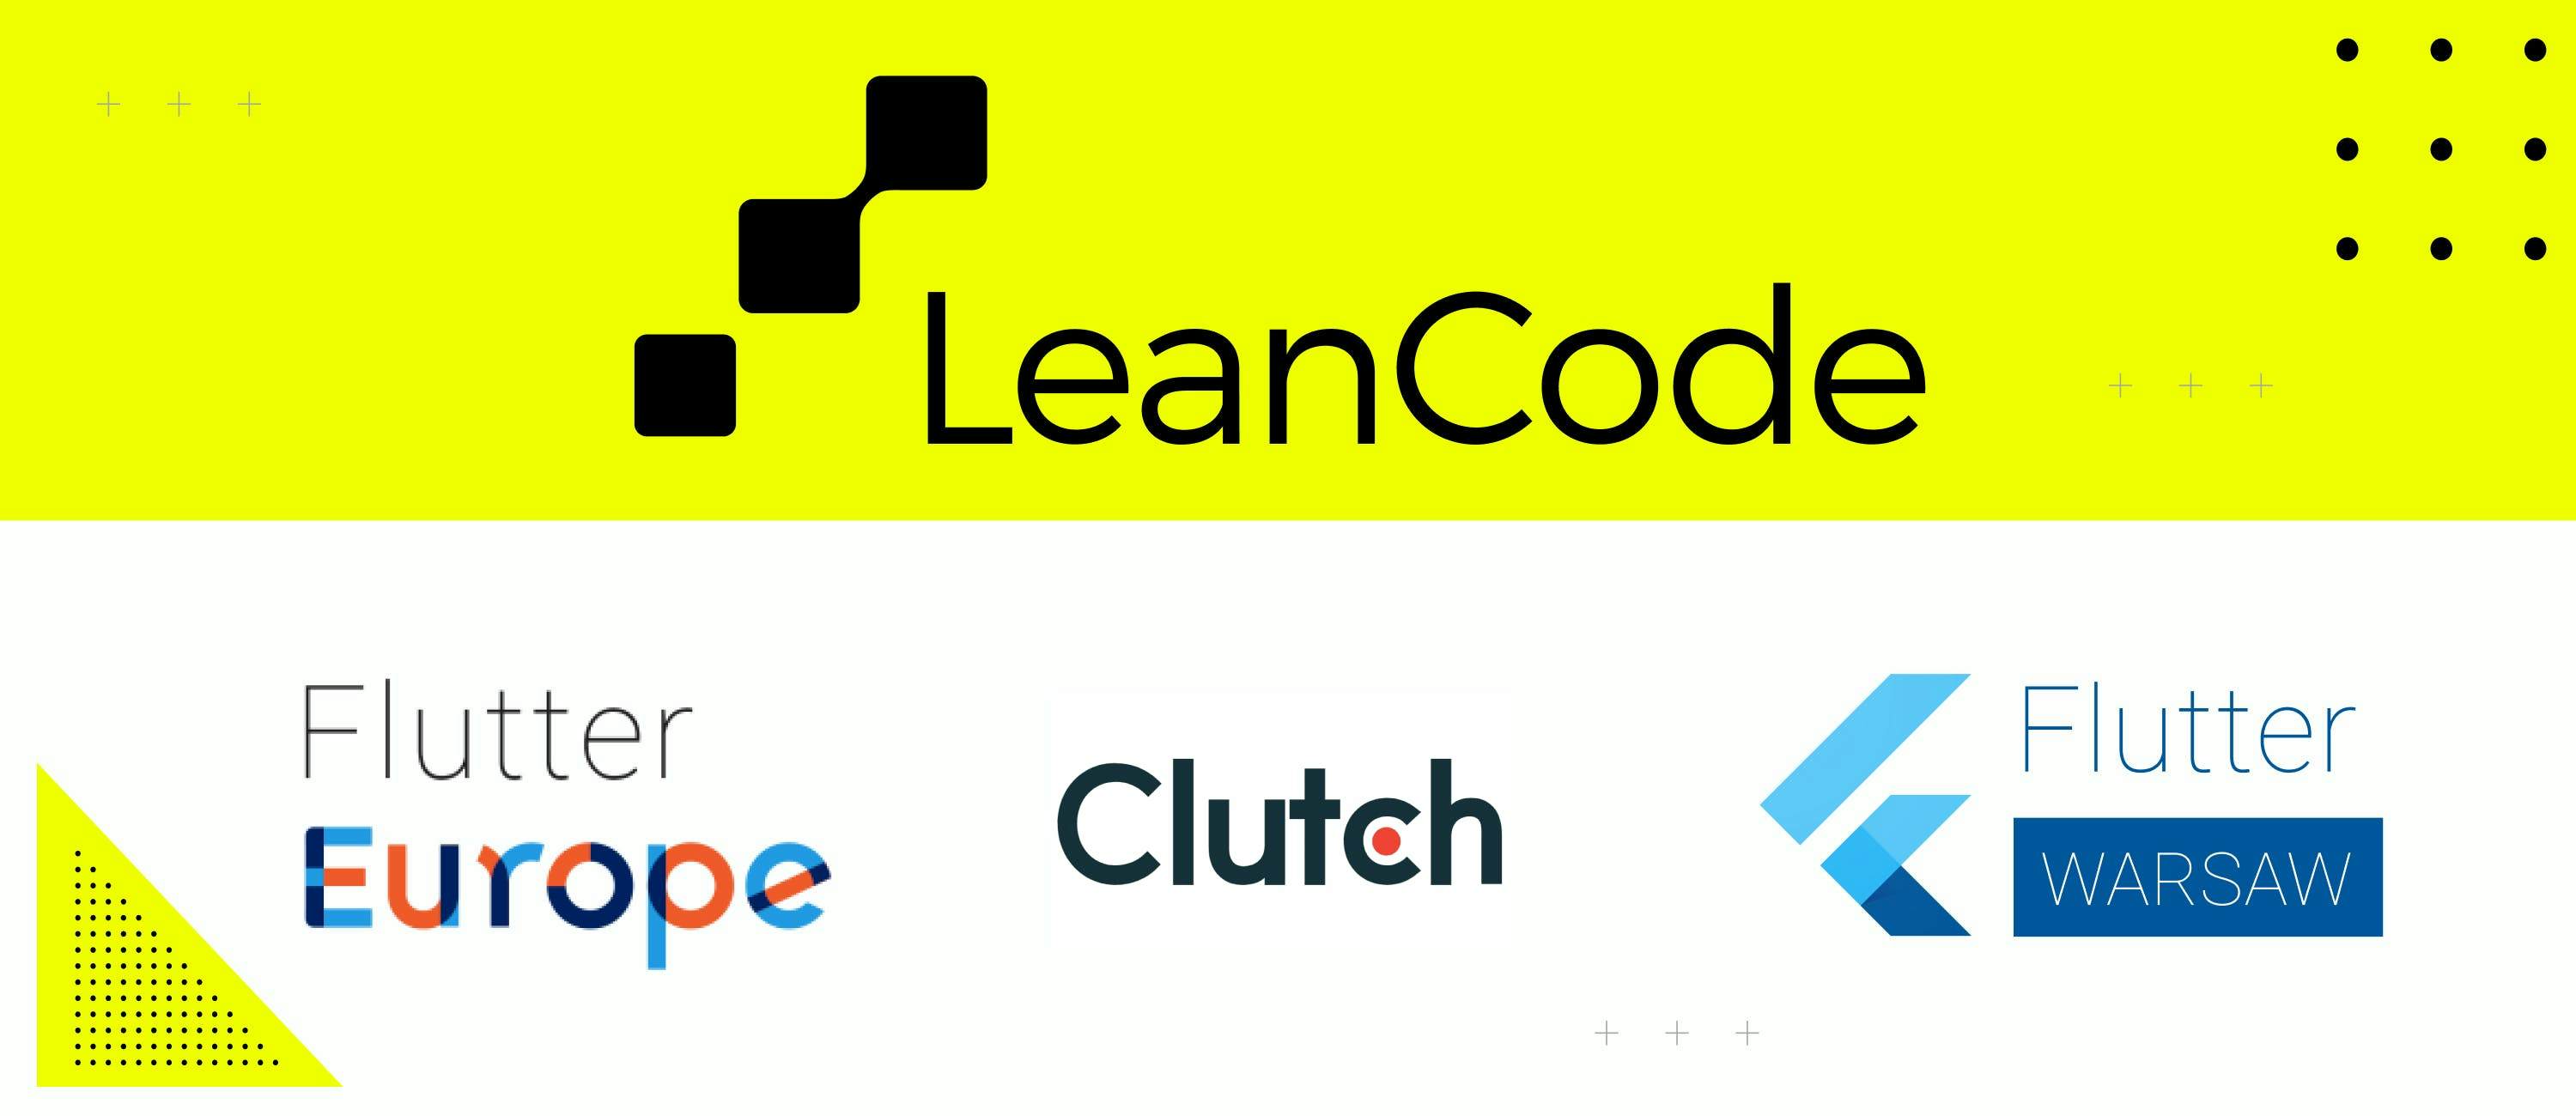 LeanCode - probably the best software studio for Flutter apps